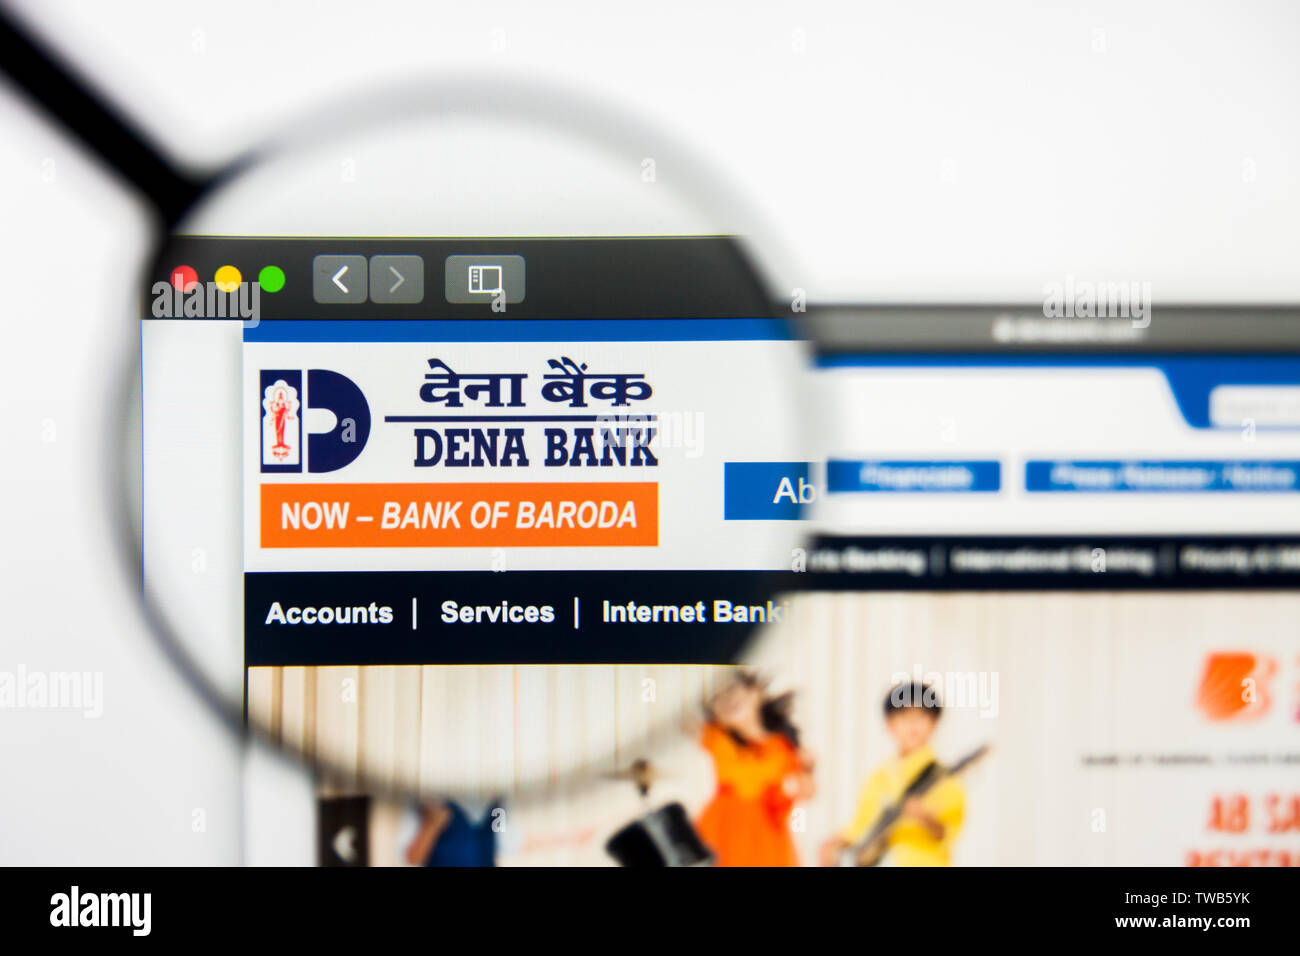 Image Result For Dena Bank Logo Hd Bank Jobs Literacy